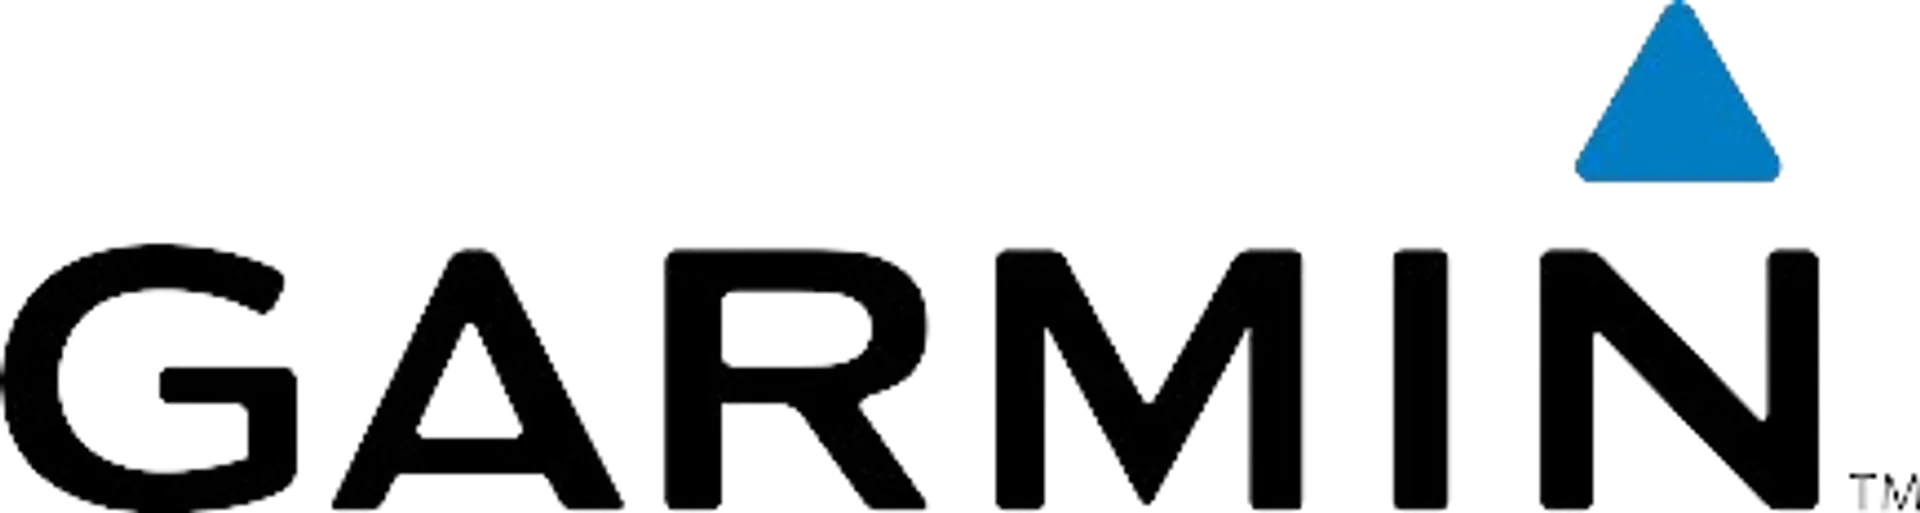 GARMIN logo in de folder van deze week